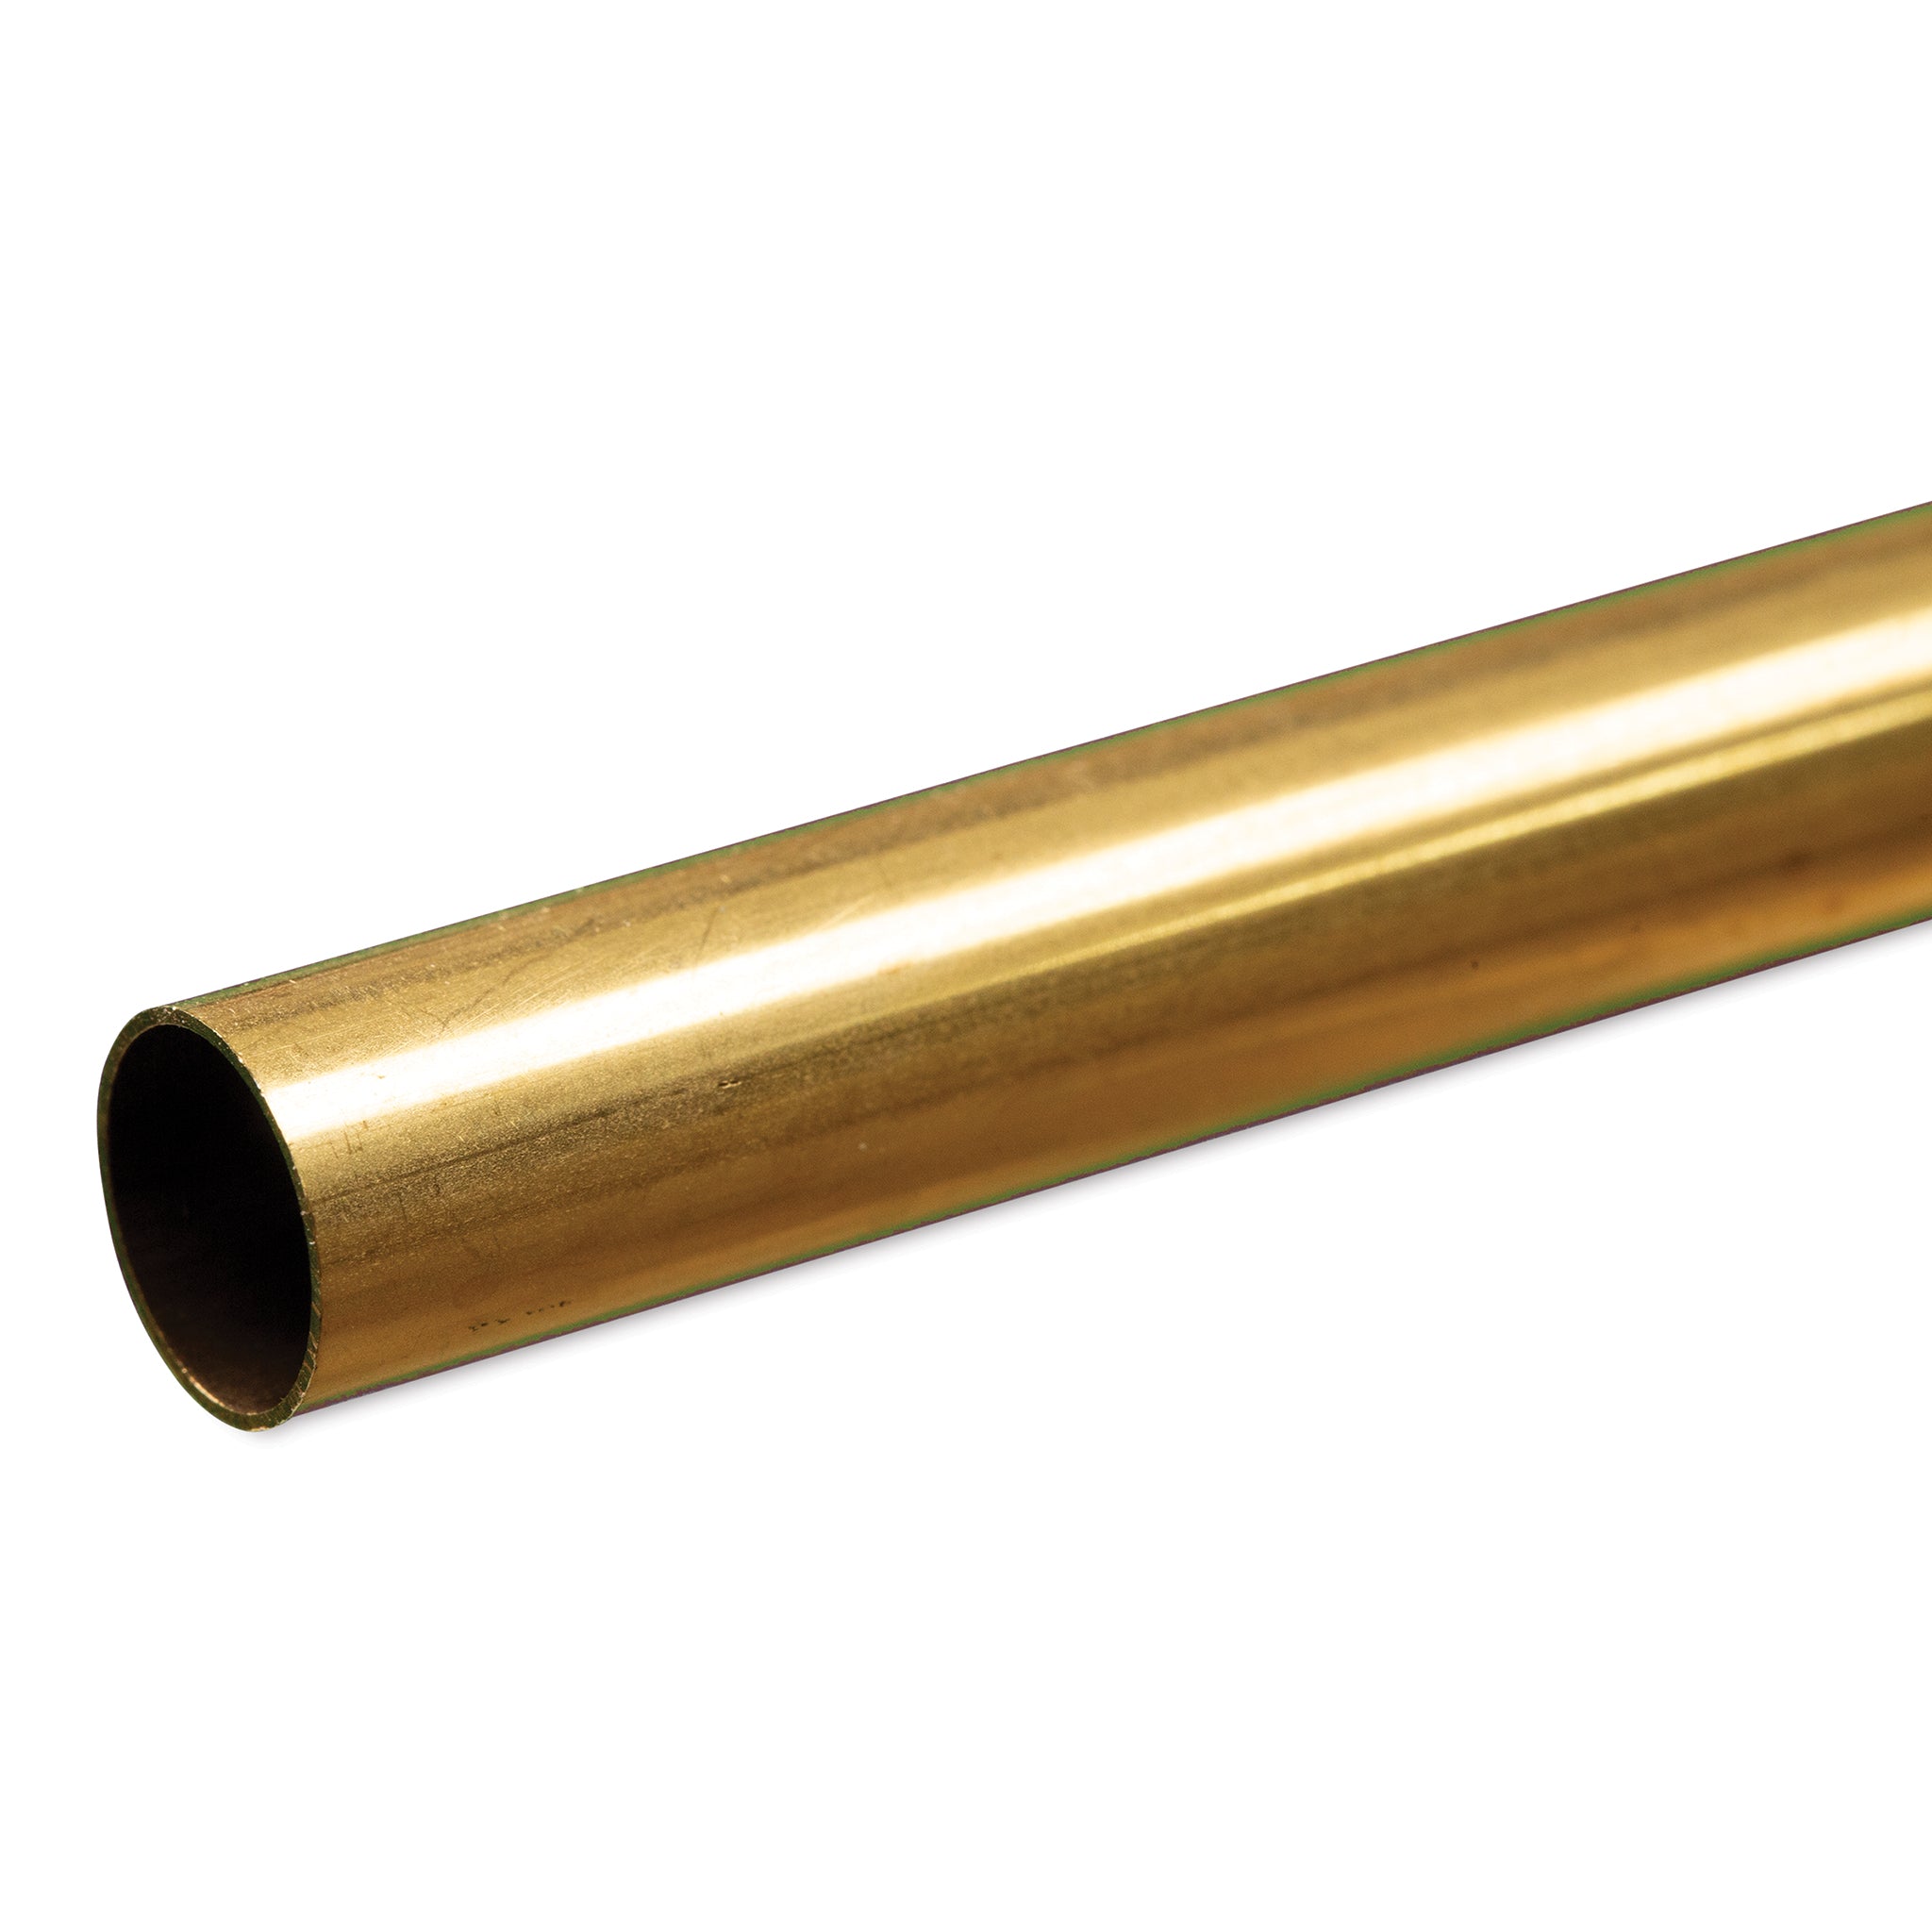 K&S Metals 8134 Round Brass Tube 11/32" OD x 0.014" Wall x 12" Long (1 Piece)